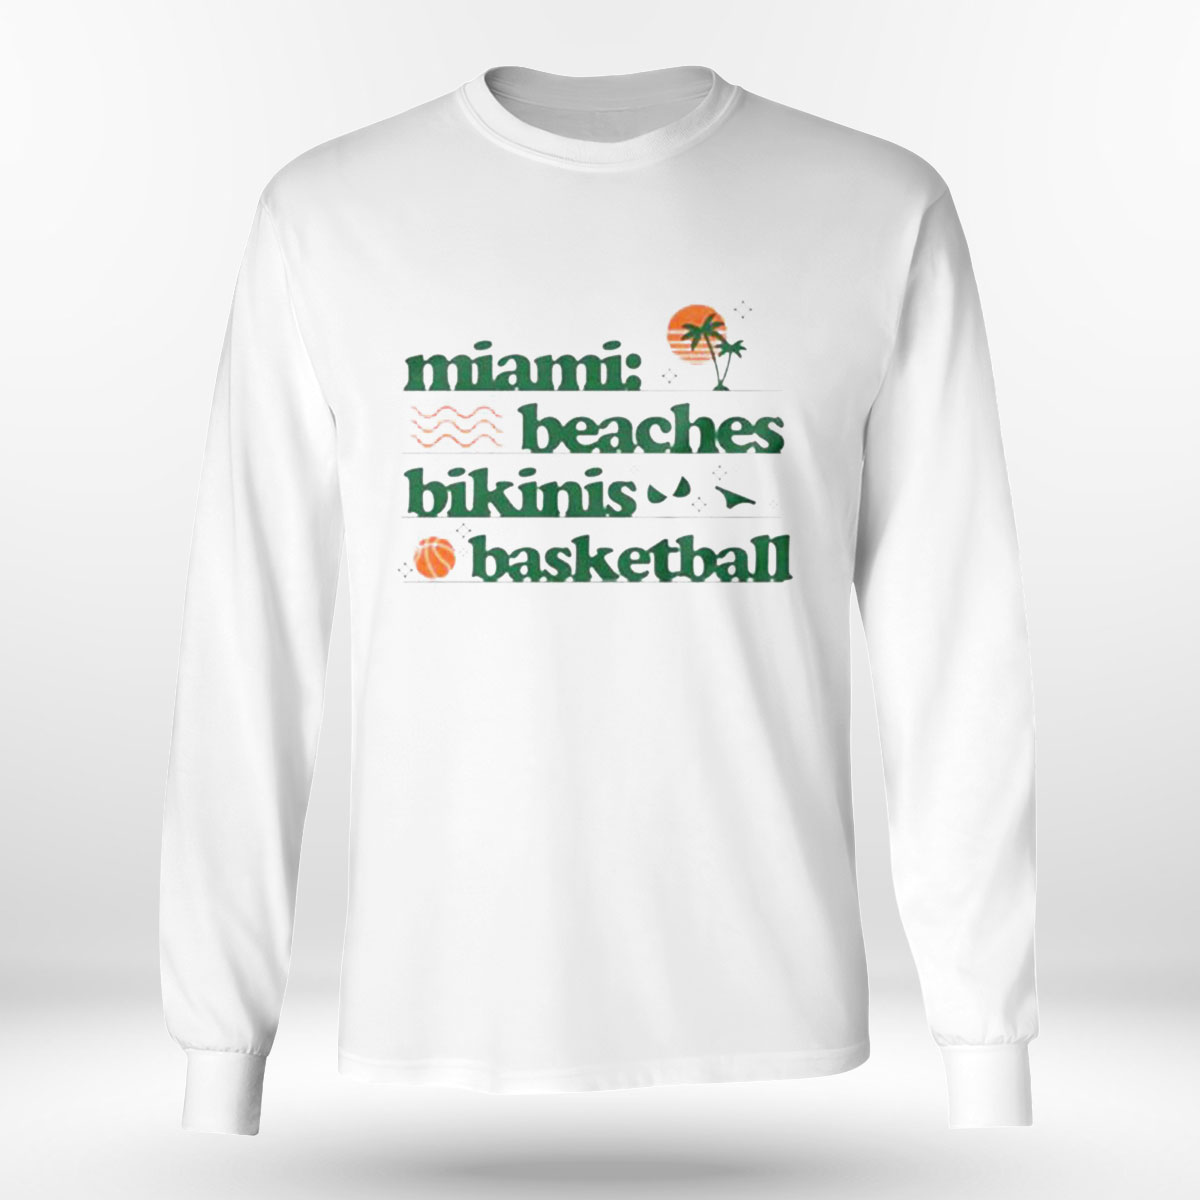 Miami Beaches Bikinis Basketball T-shirt